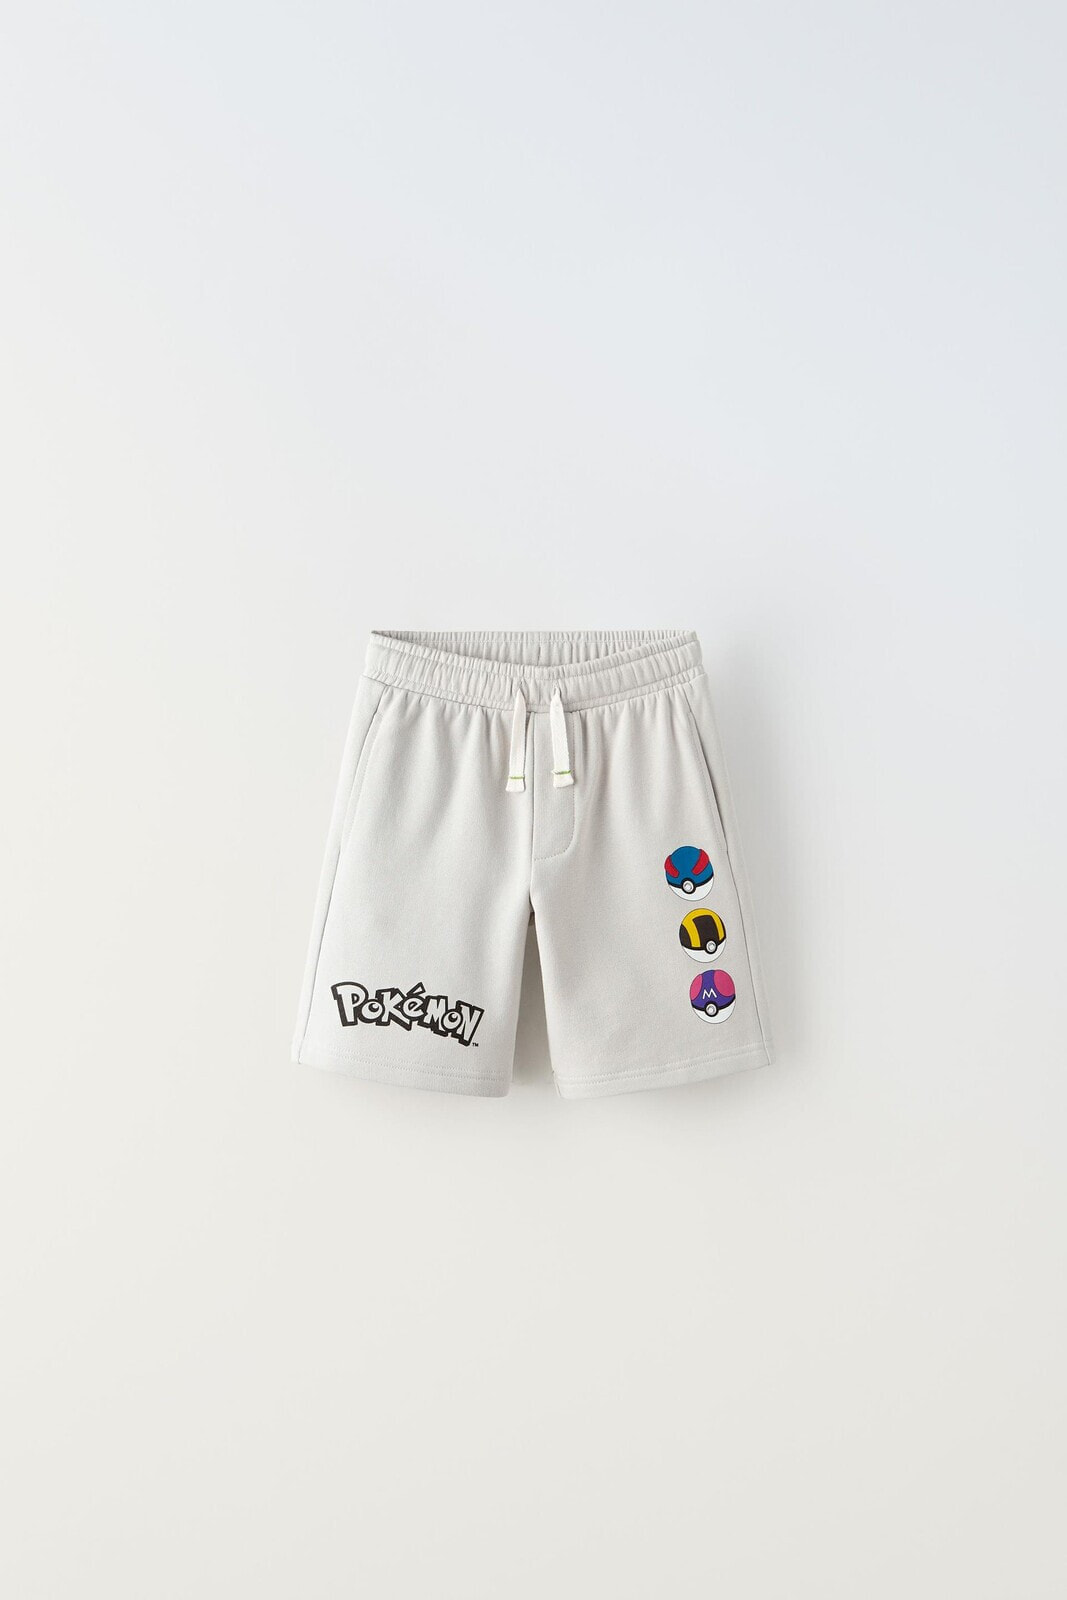 Plush pokémon ™ bermuda shorts